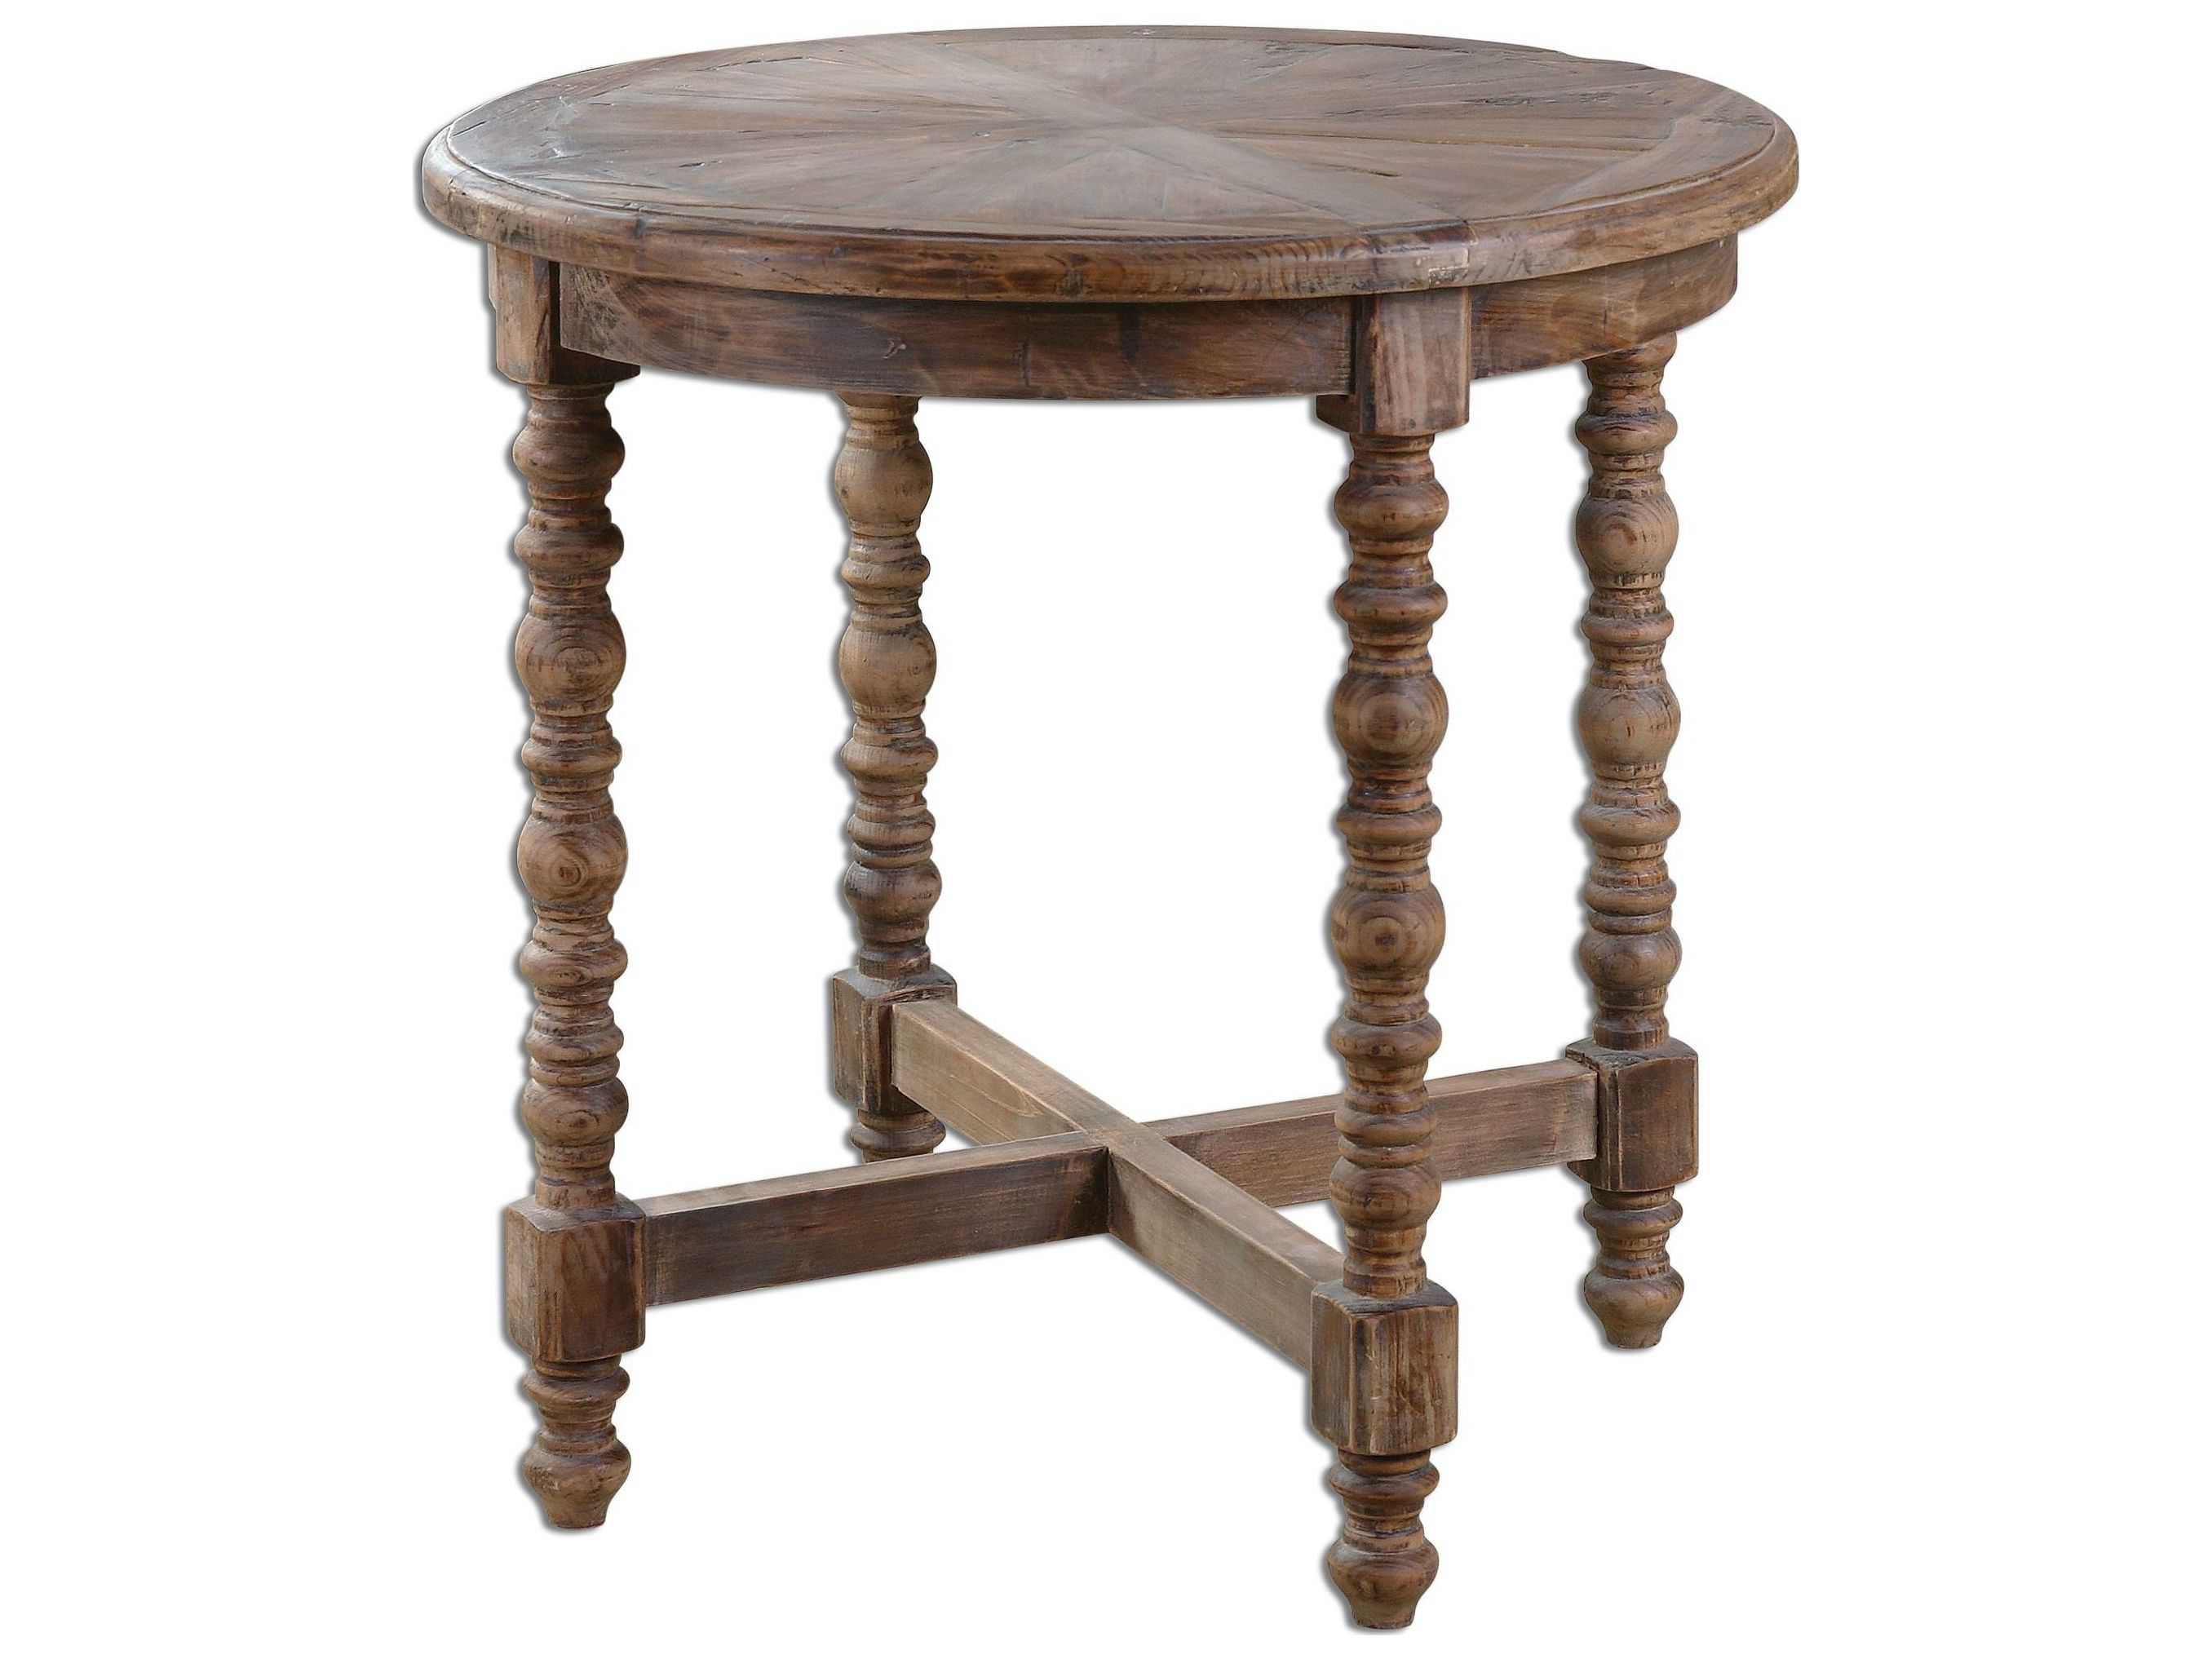 26 round. Приставной столик из натурального дерева. Столик приставной из красного дерева. УТТЕР стол.